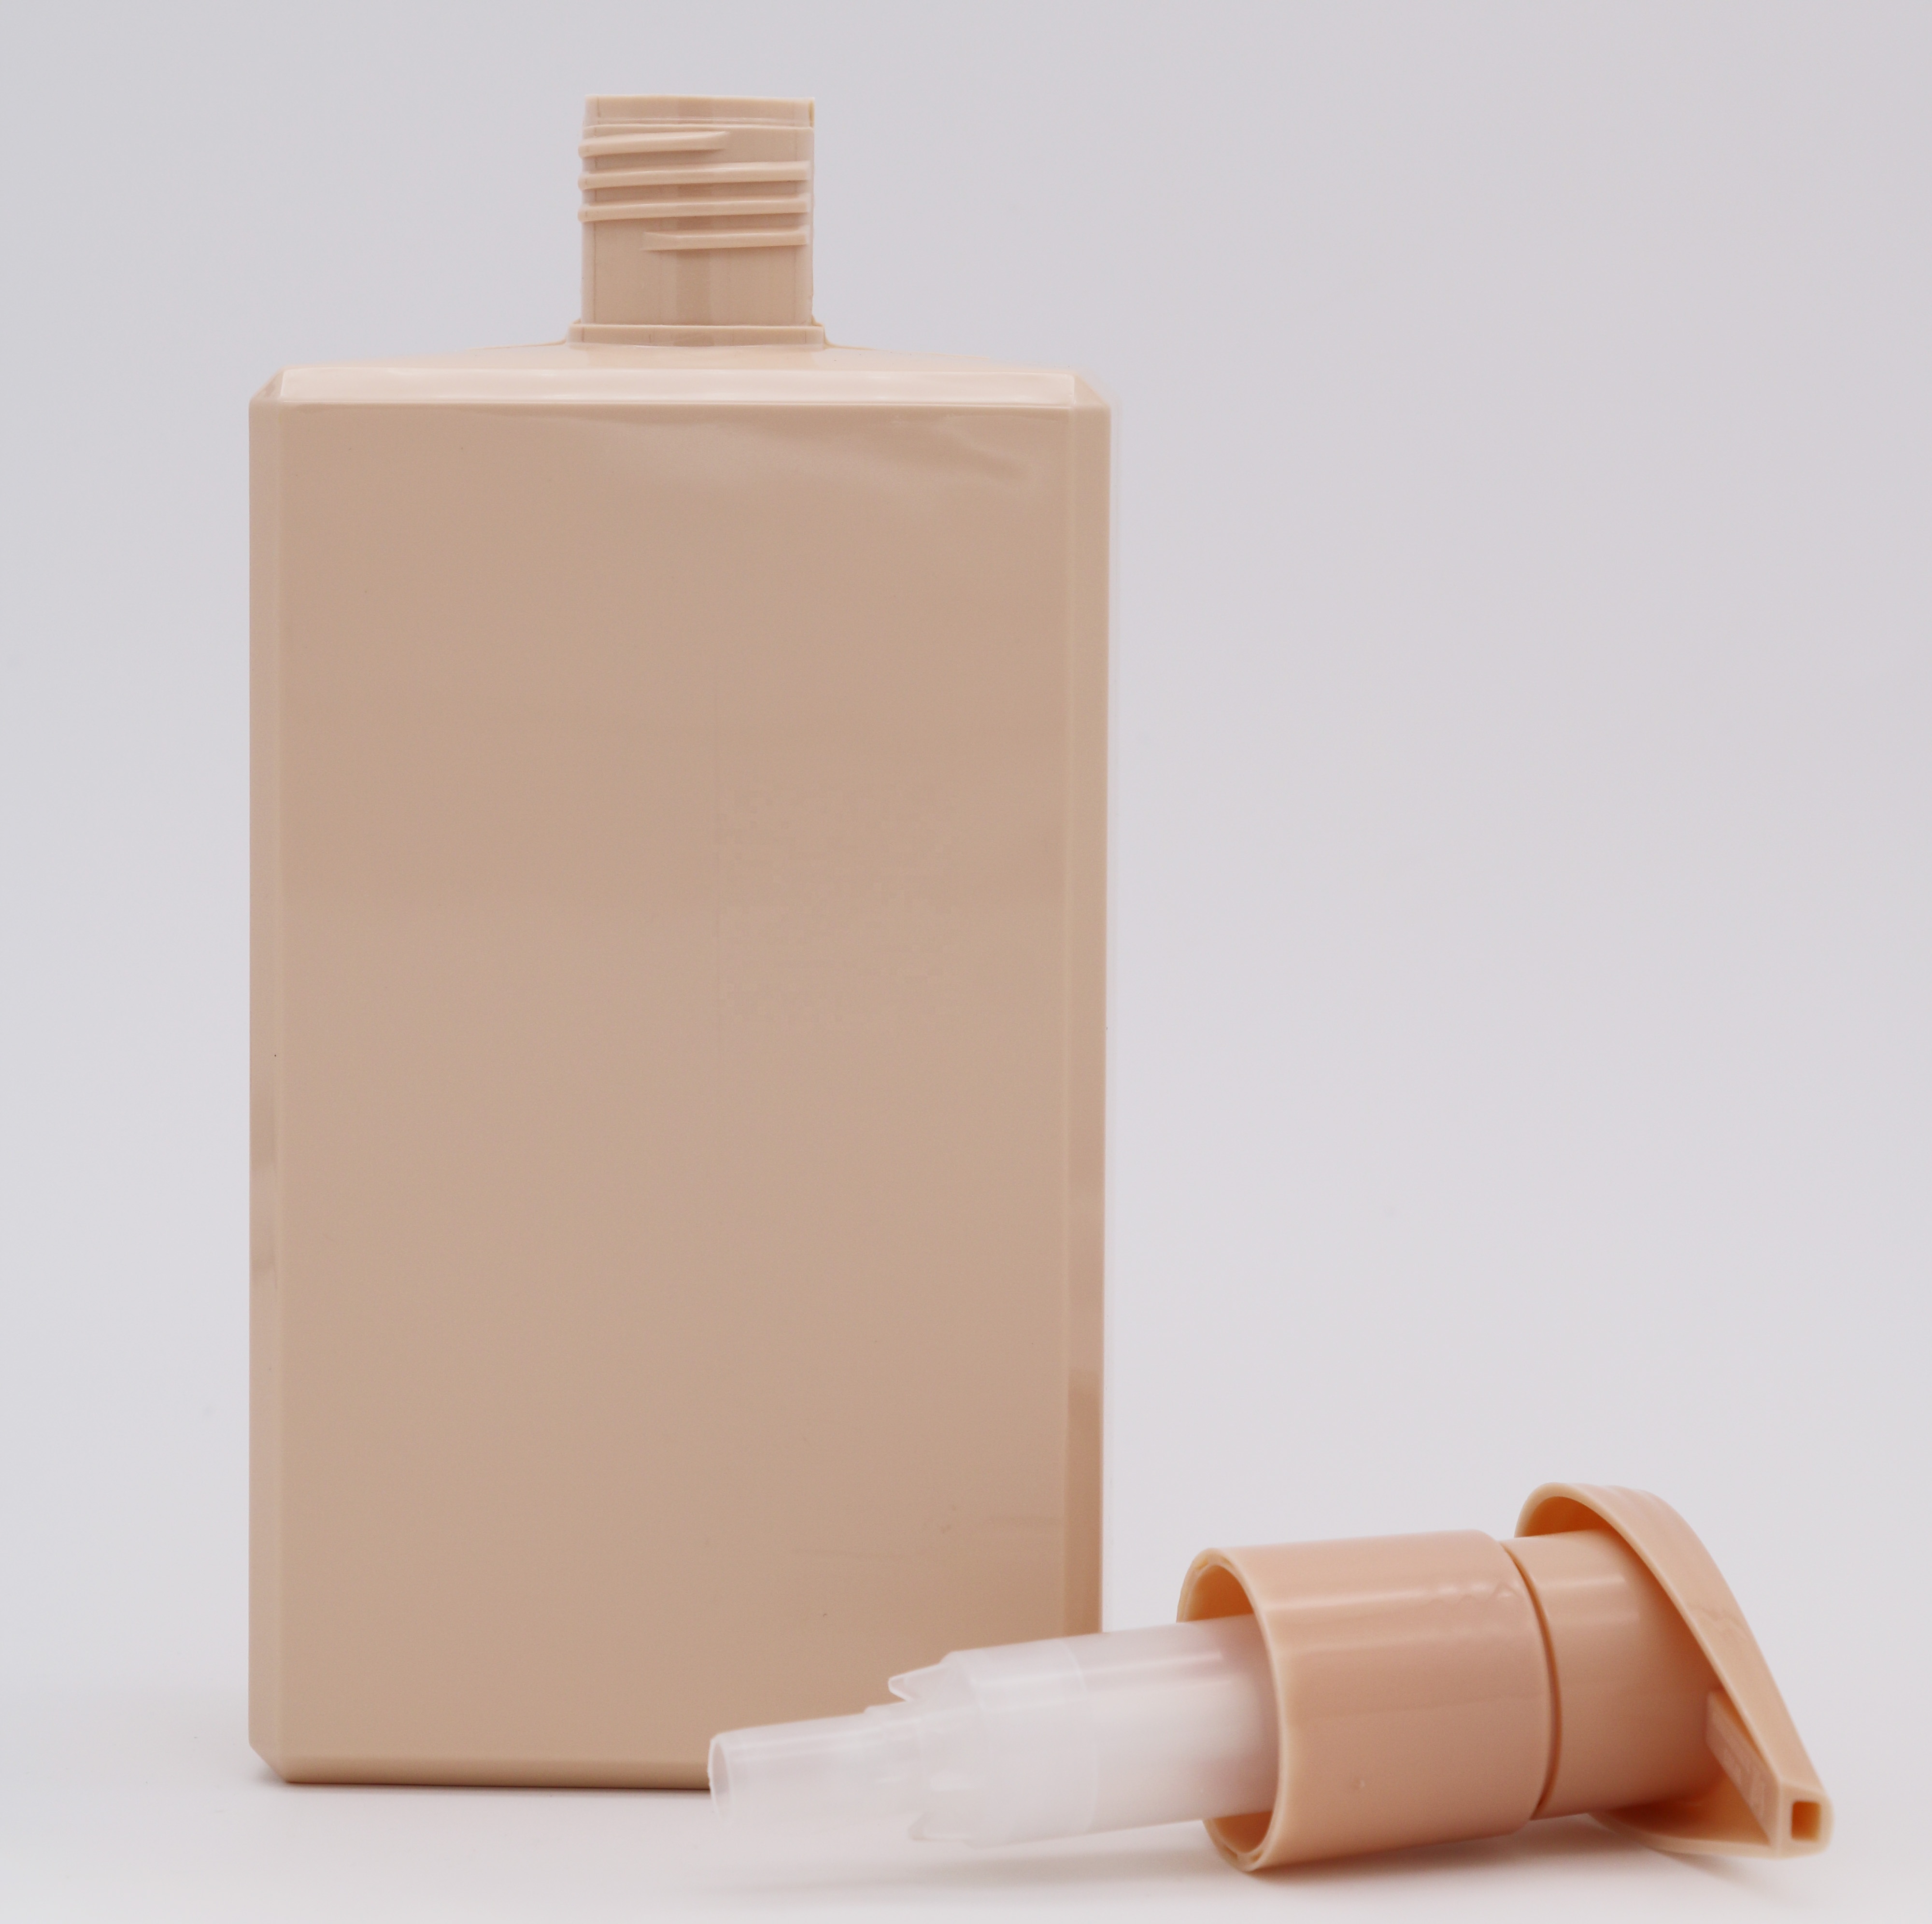 250 ml square Lotion/Shampoo/Conditioner Bottle